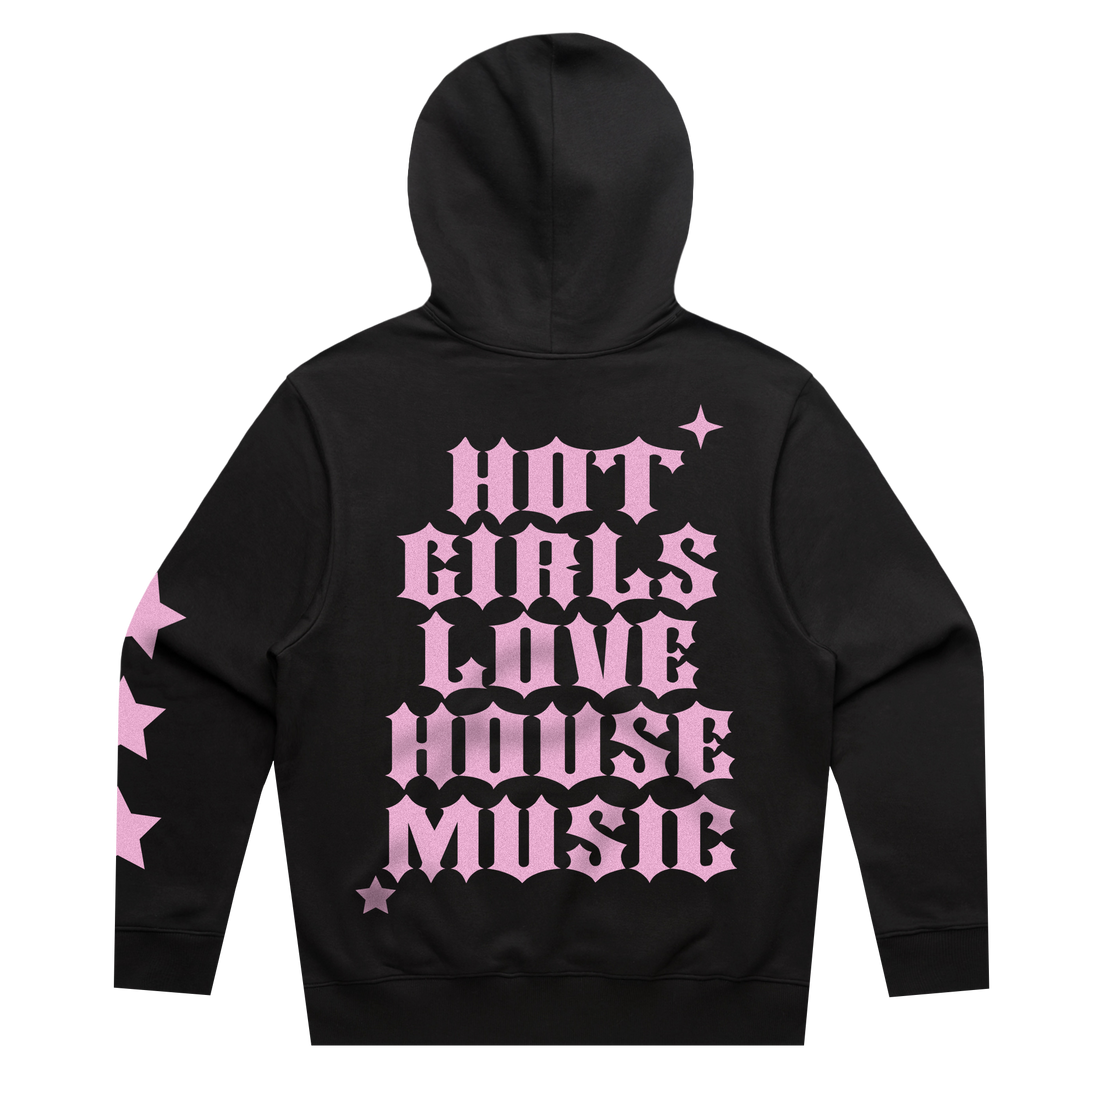 NOSTALGIX - Hot Girls Love House Music Hoodie - Black